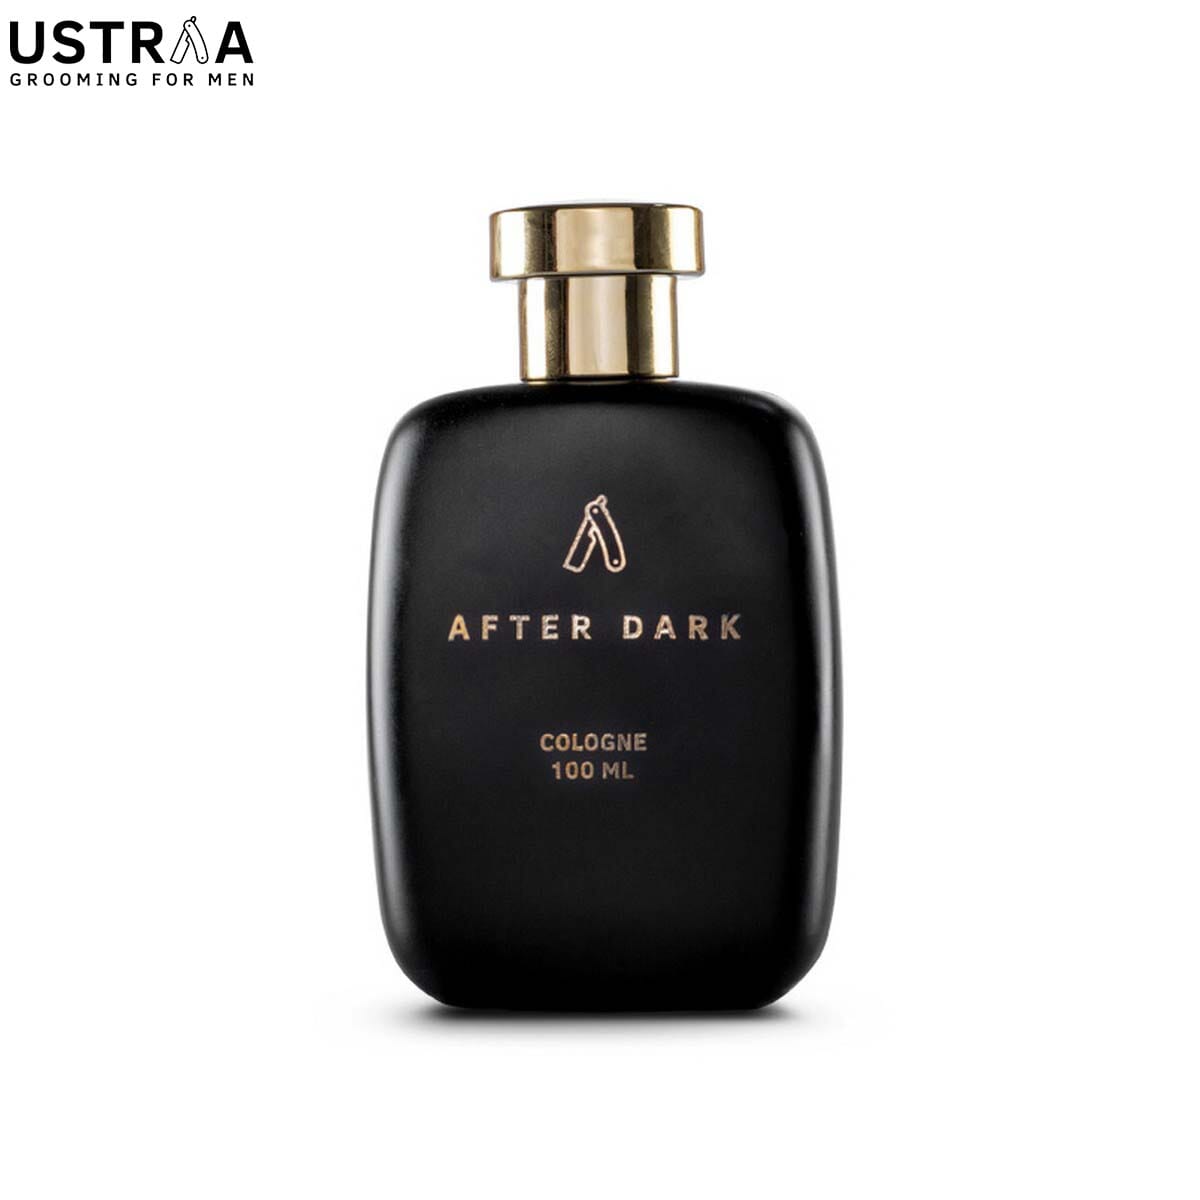 Ustraa After Dark Cologne - 100 ml - Perfume for Men